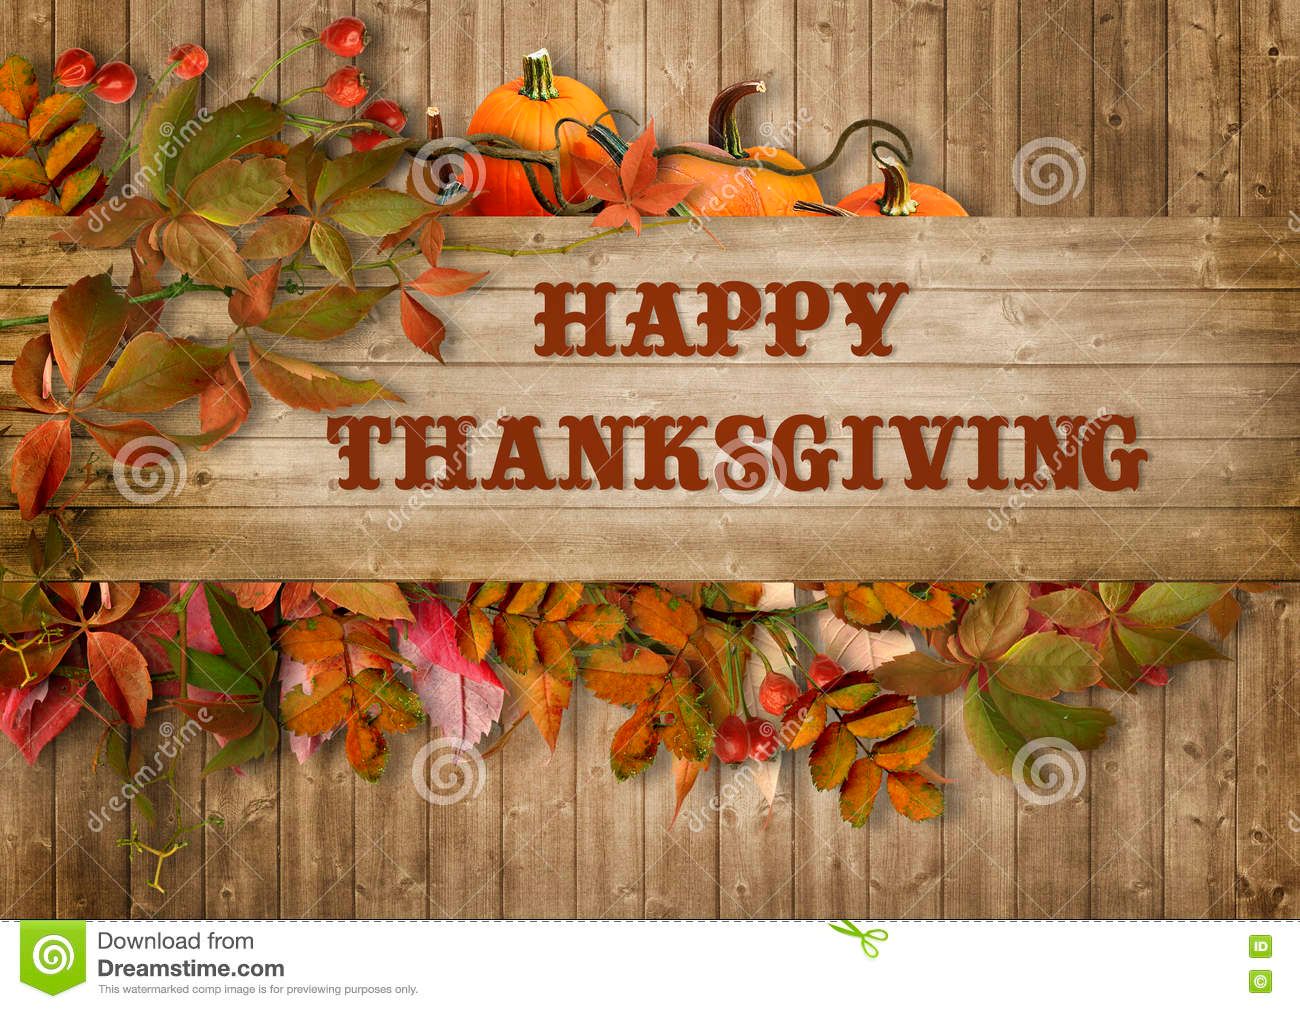 happy-thanksgiving-card-vintage-wooden-background-pumpkin-autumn-leaves-spozdravleniem-postcards-greetings-78735746.jpg